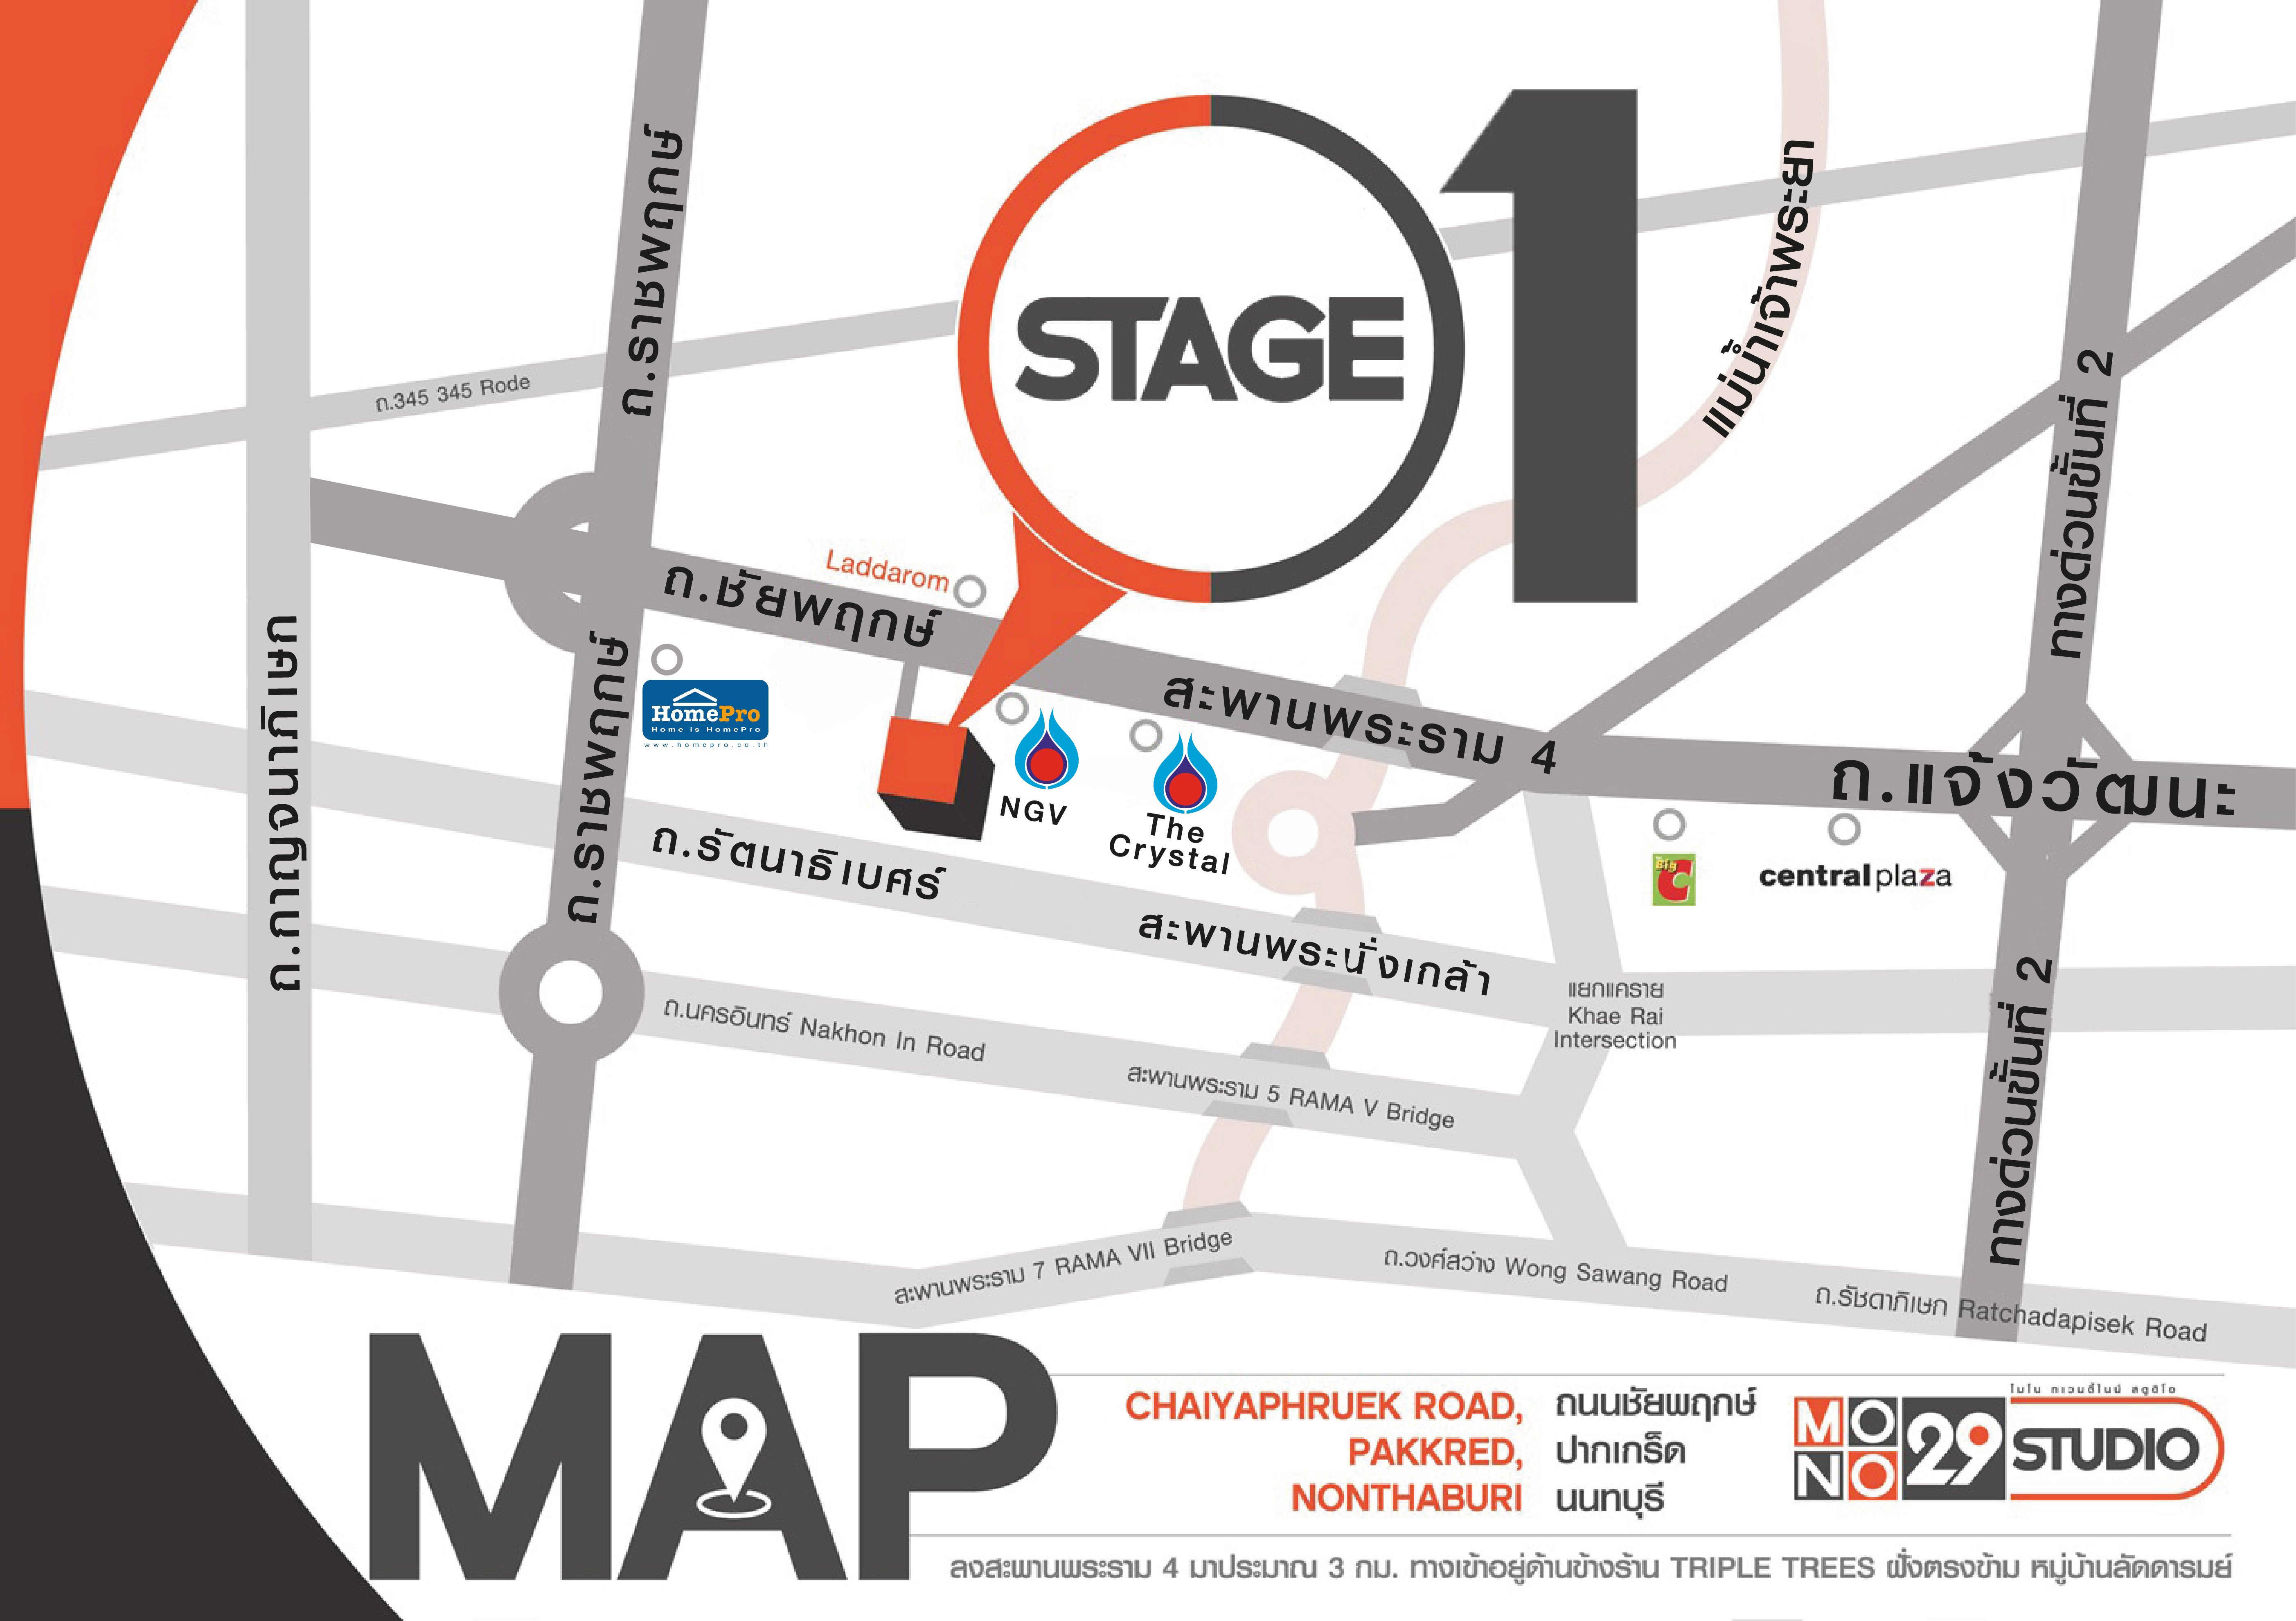 Stage 1 @Mono 29 Studio ถนนชัยพฤกษ์